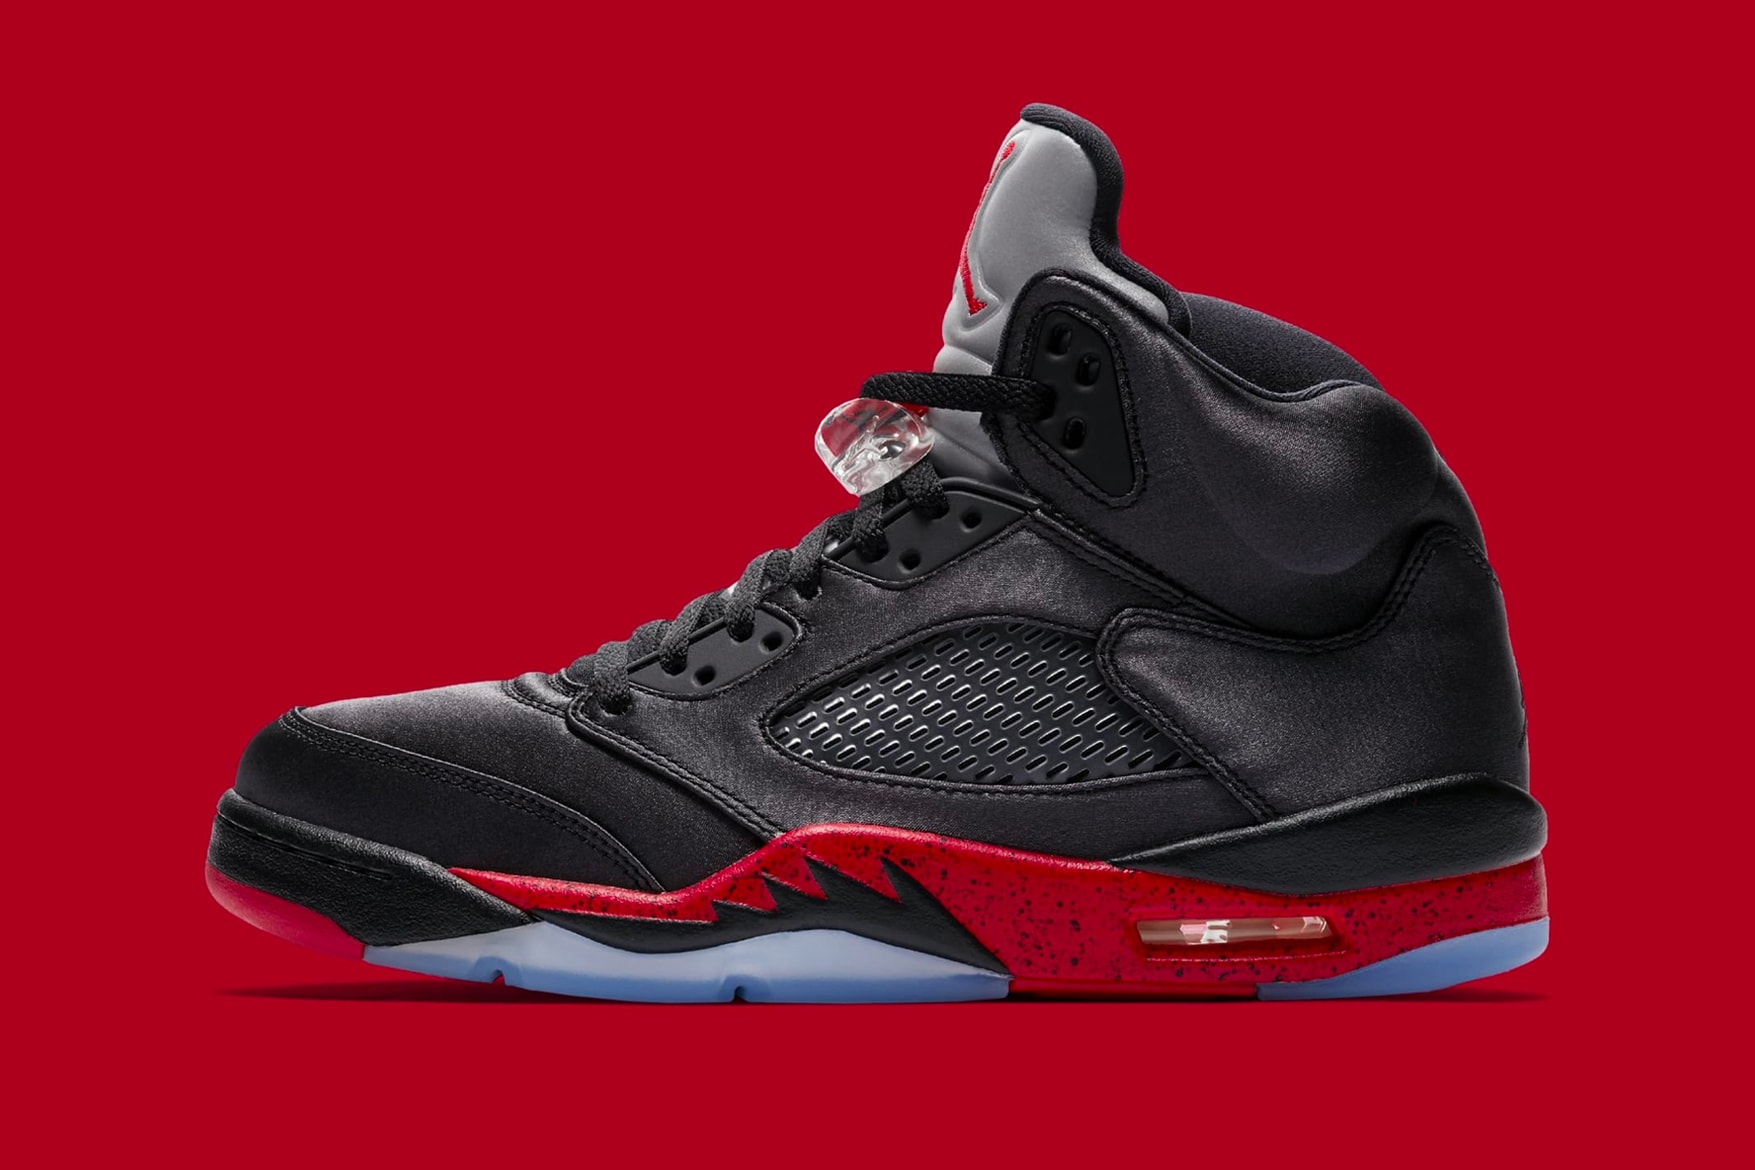 Air Jordan 5 Bred jordan brand official images release info black university red sneakers